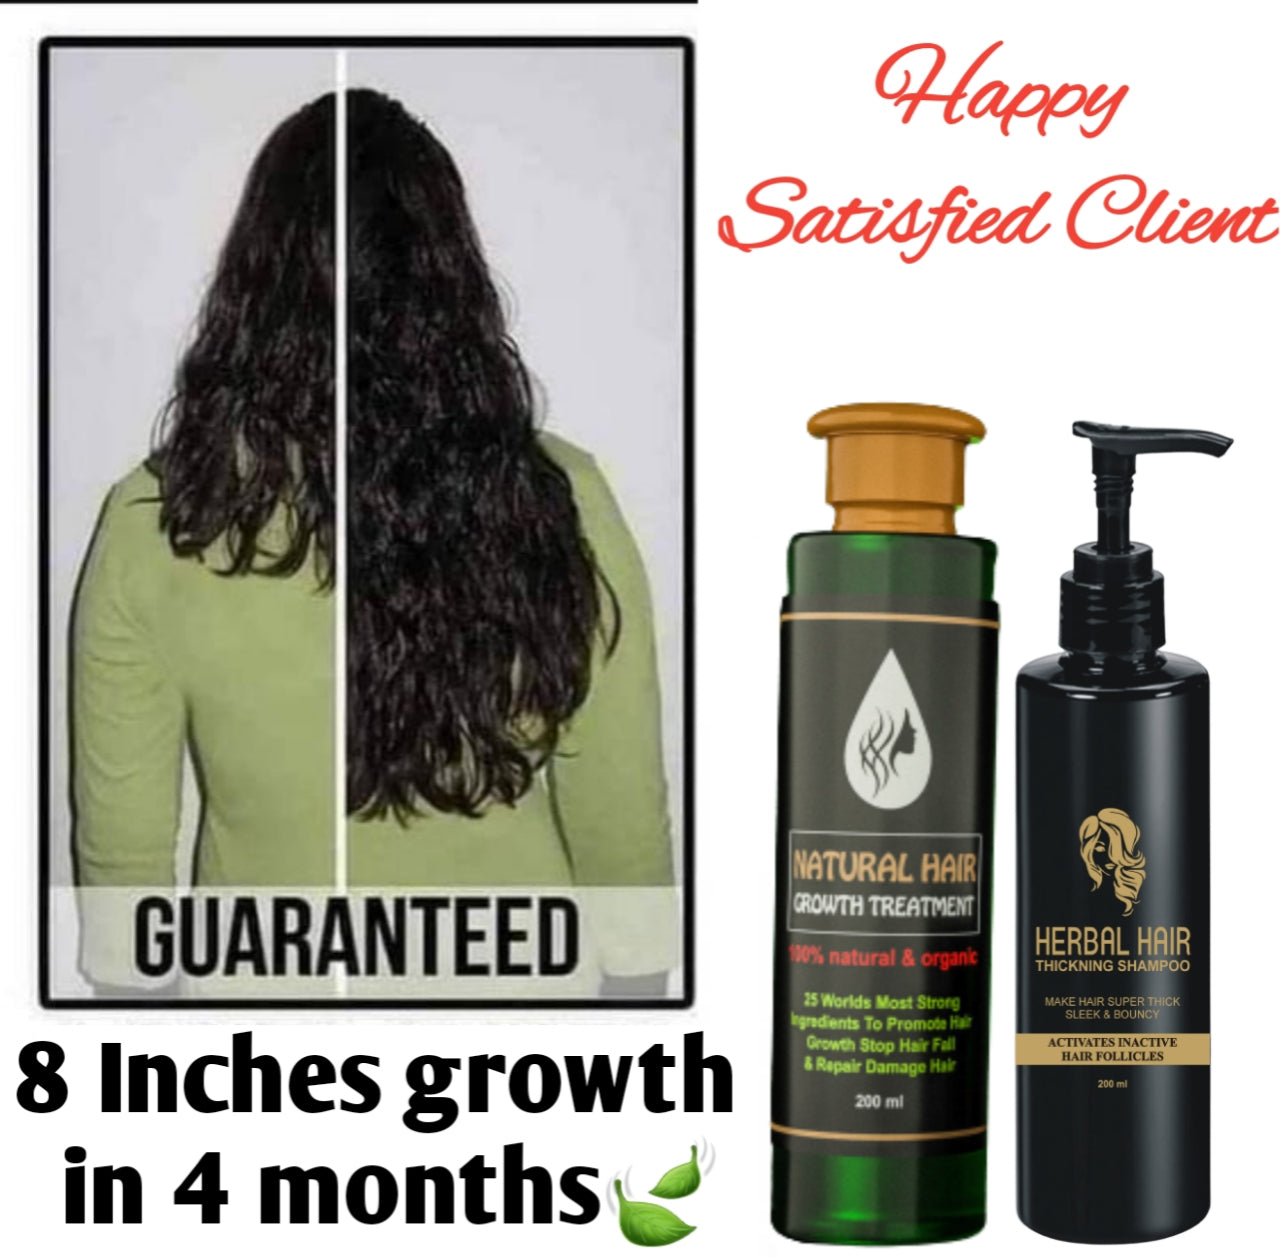 Hair Oil & Shampoo Image